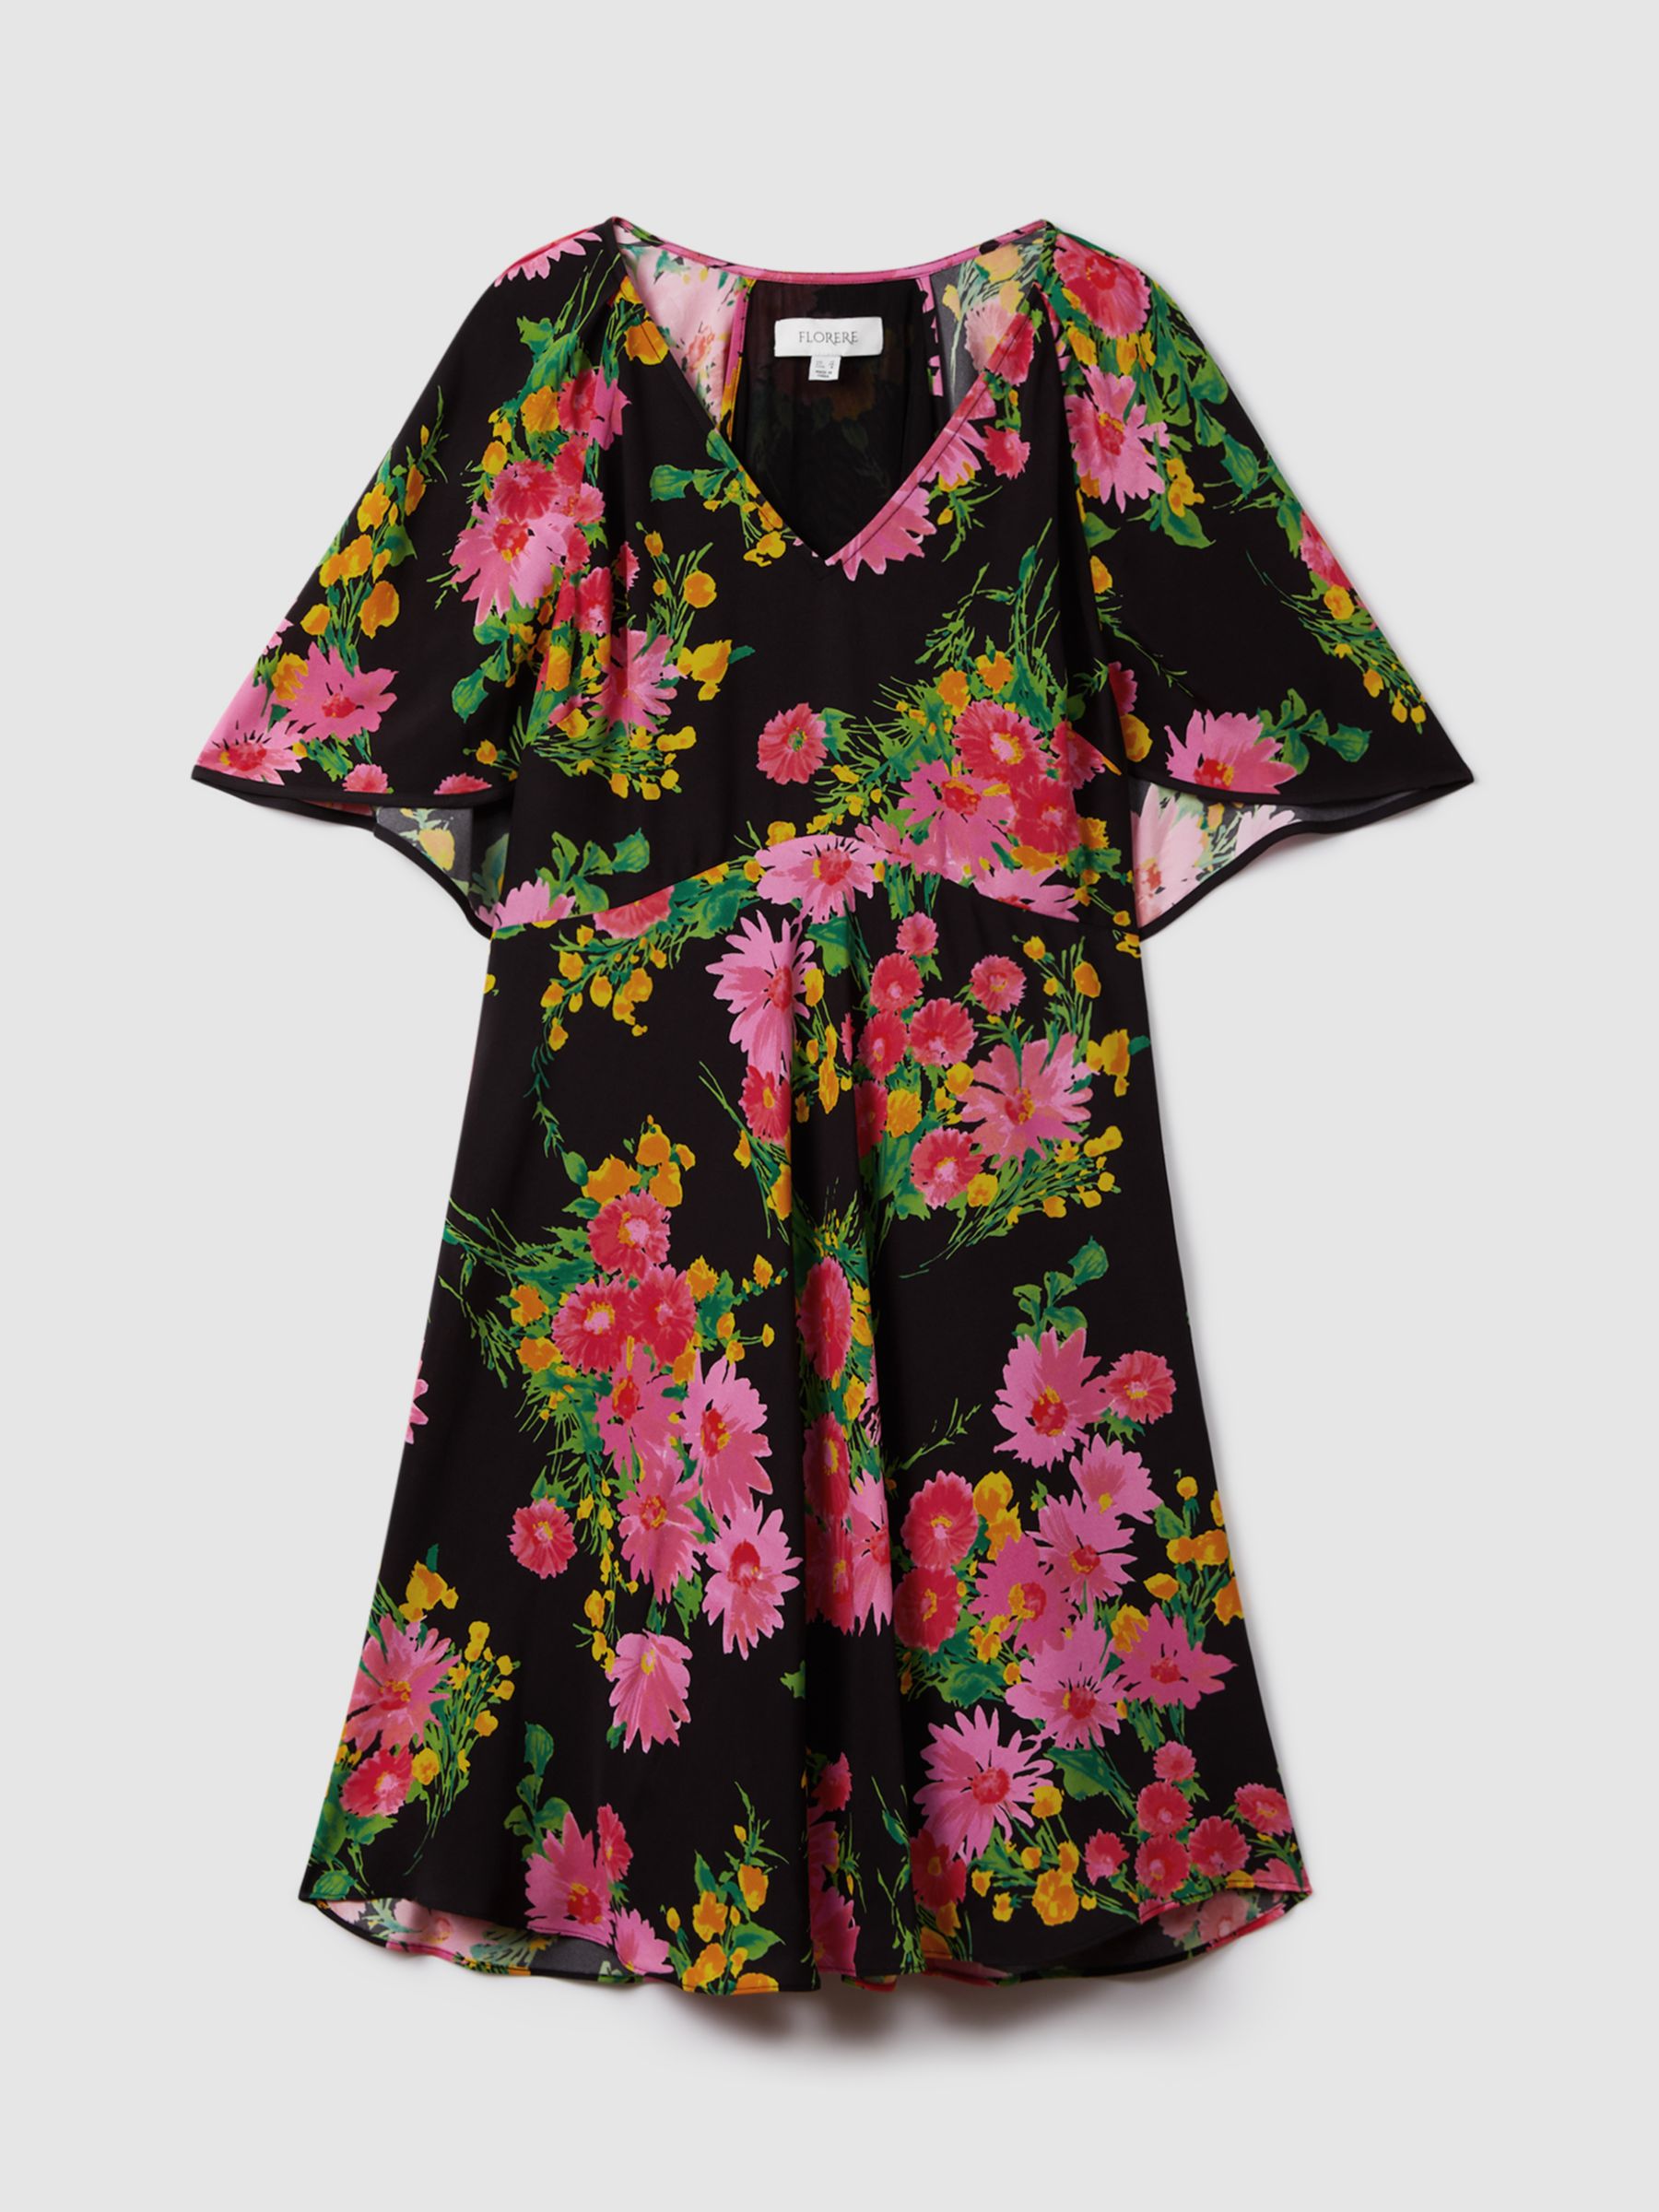 FLORERE Cape Back Detail Floral Print Mini Dress, Black/Multi, 8